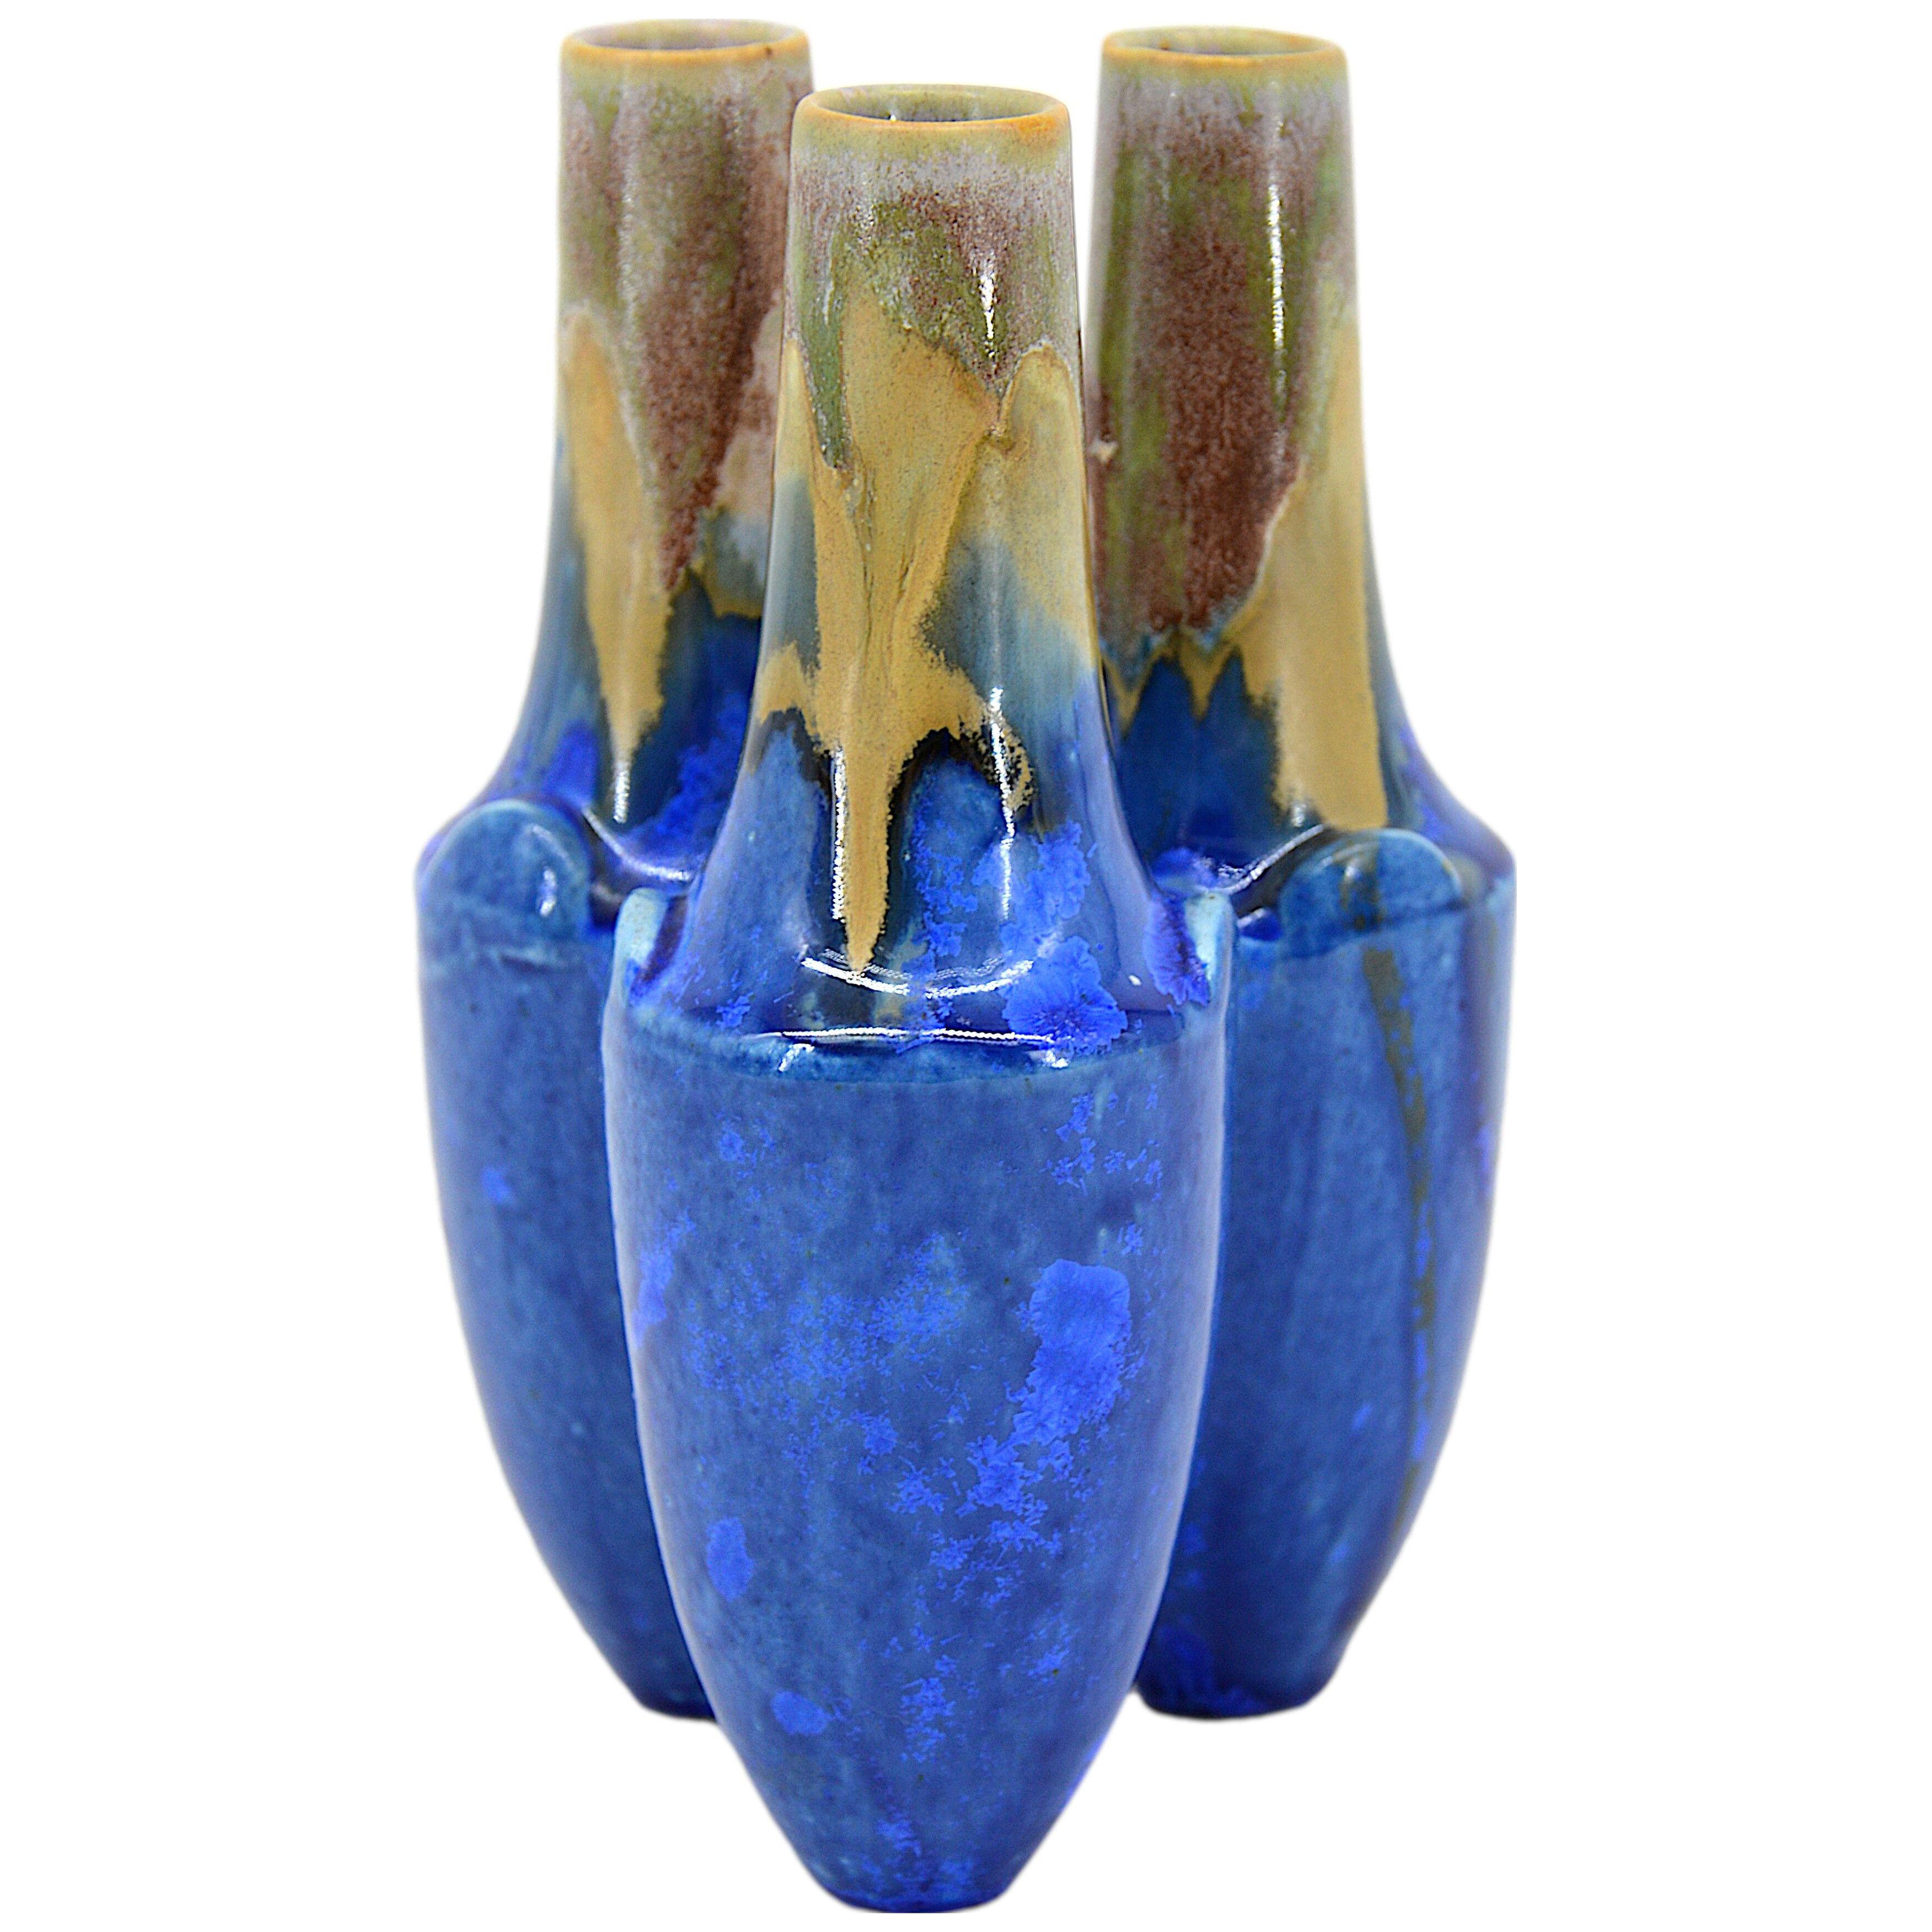 Gilbert METENIER French Art Deco Stoneware Vase 1920